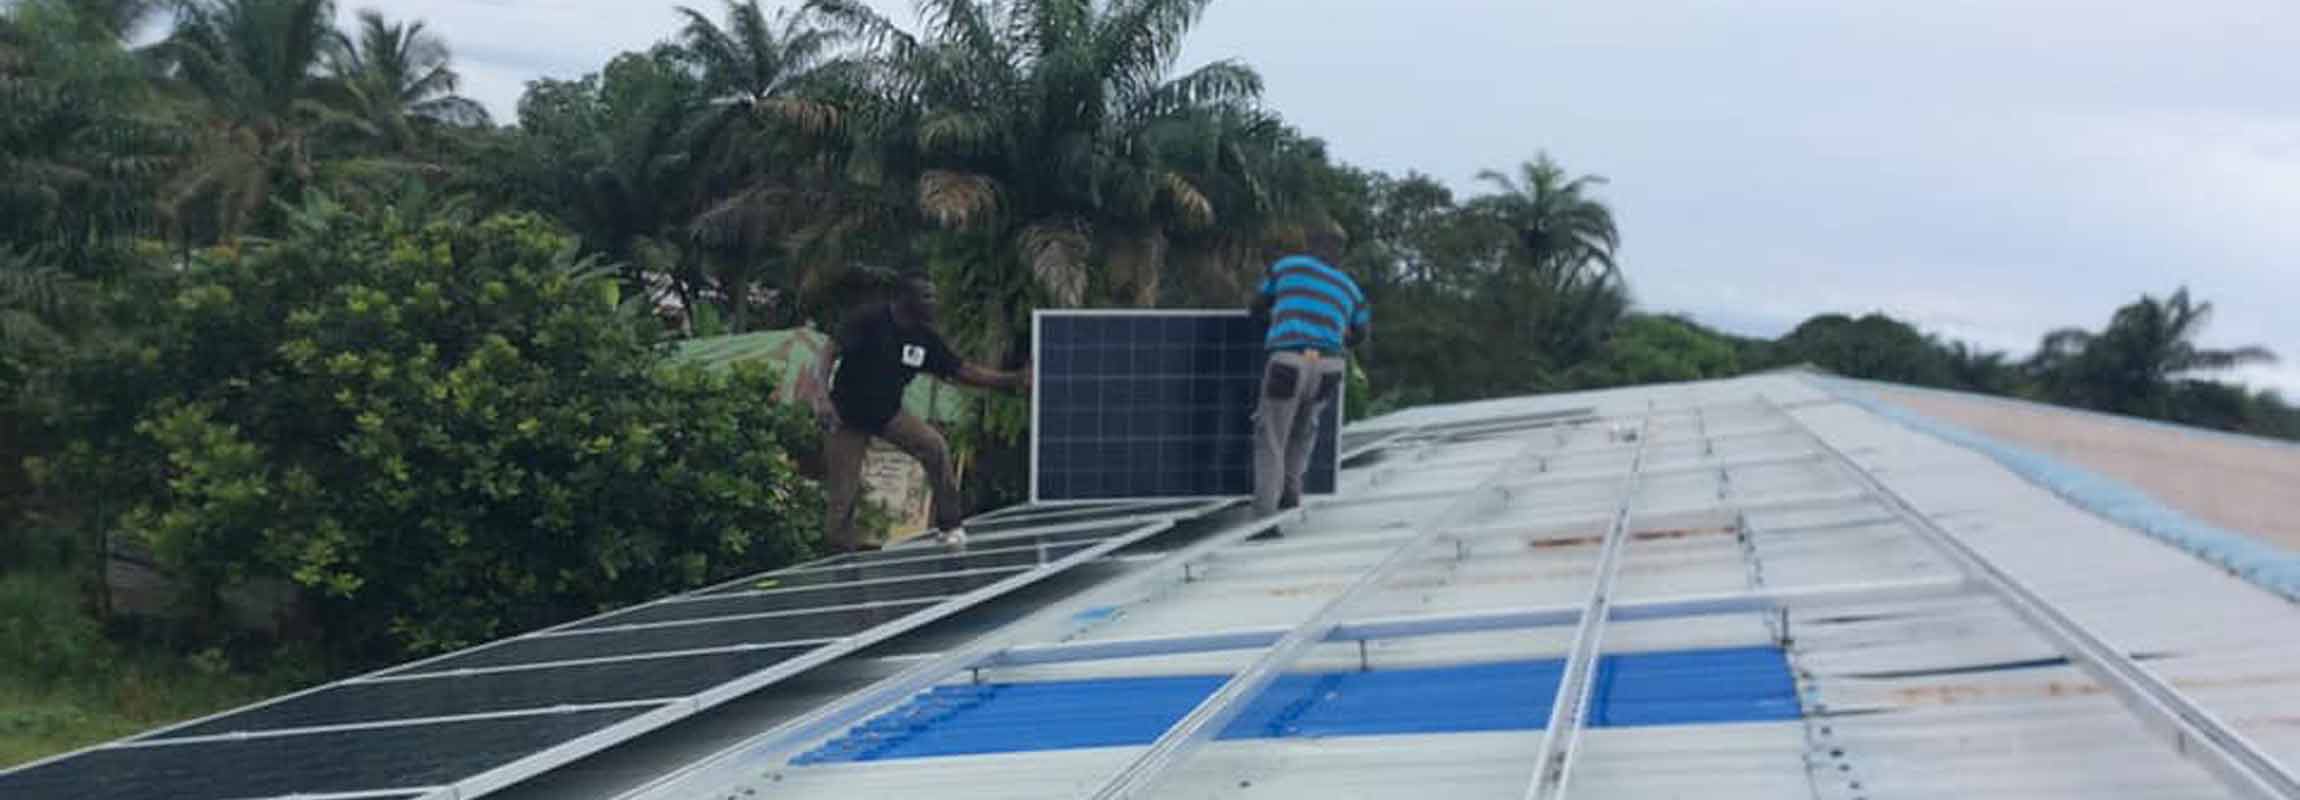 Solceller monteras på sjukhustak i Liberia